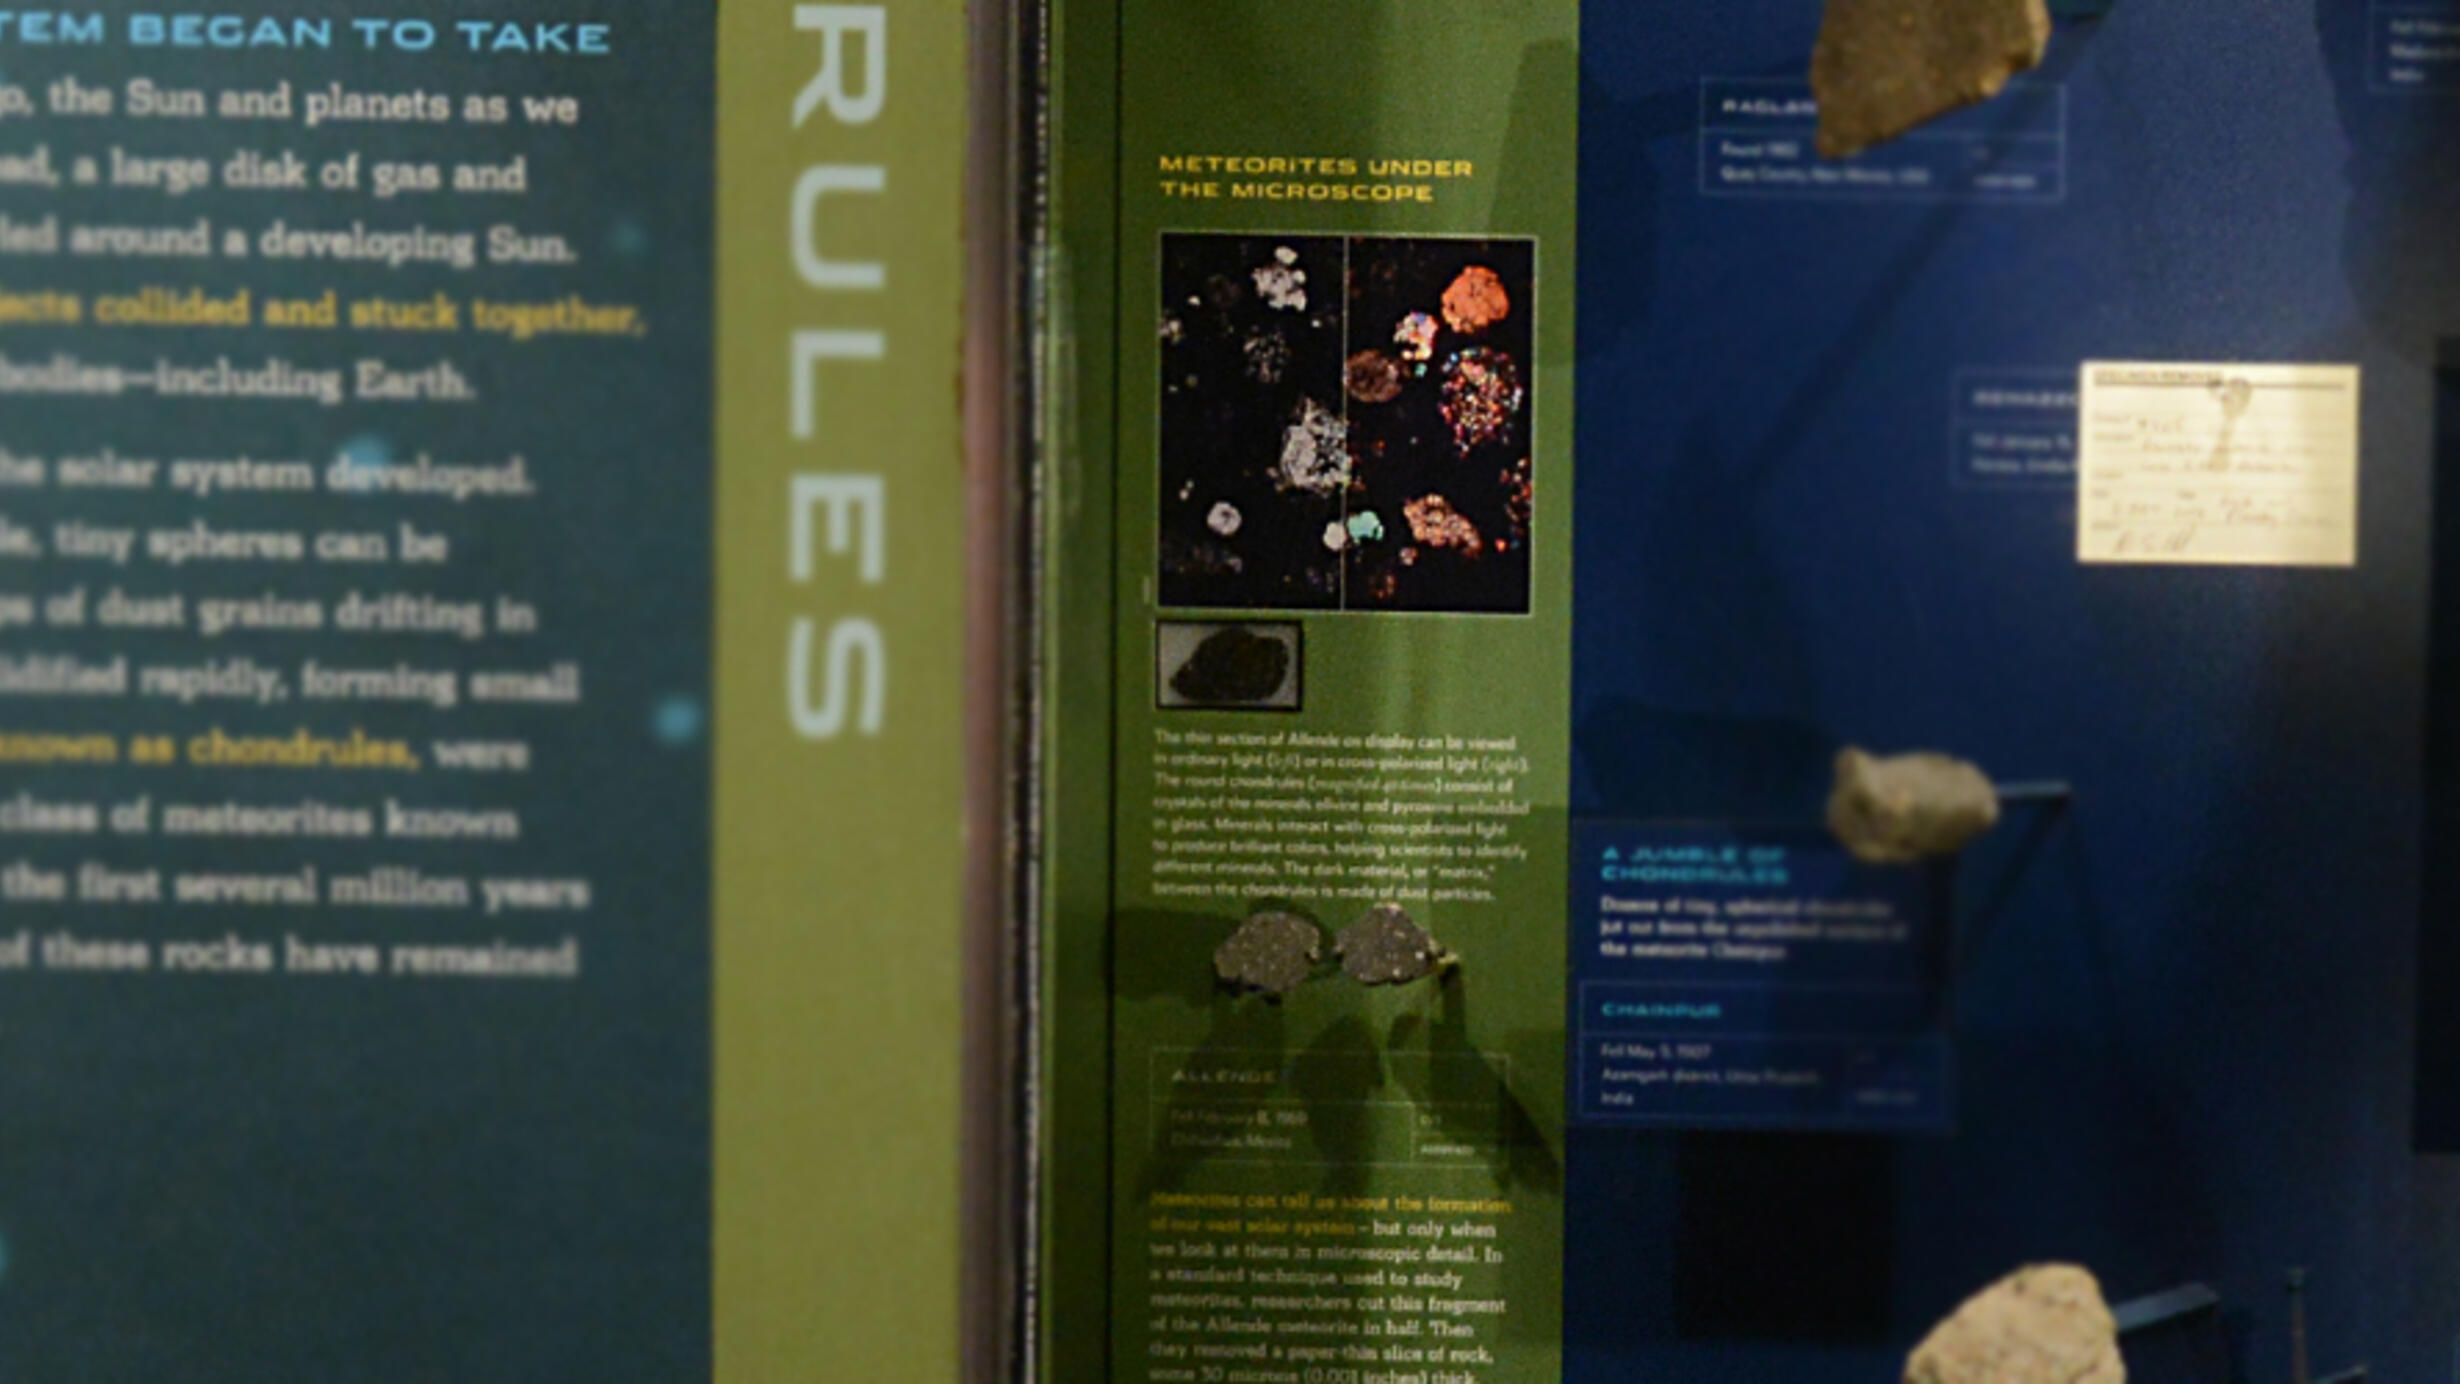  B.2.1 Meteorites under the microscope hero